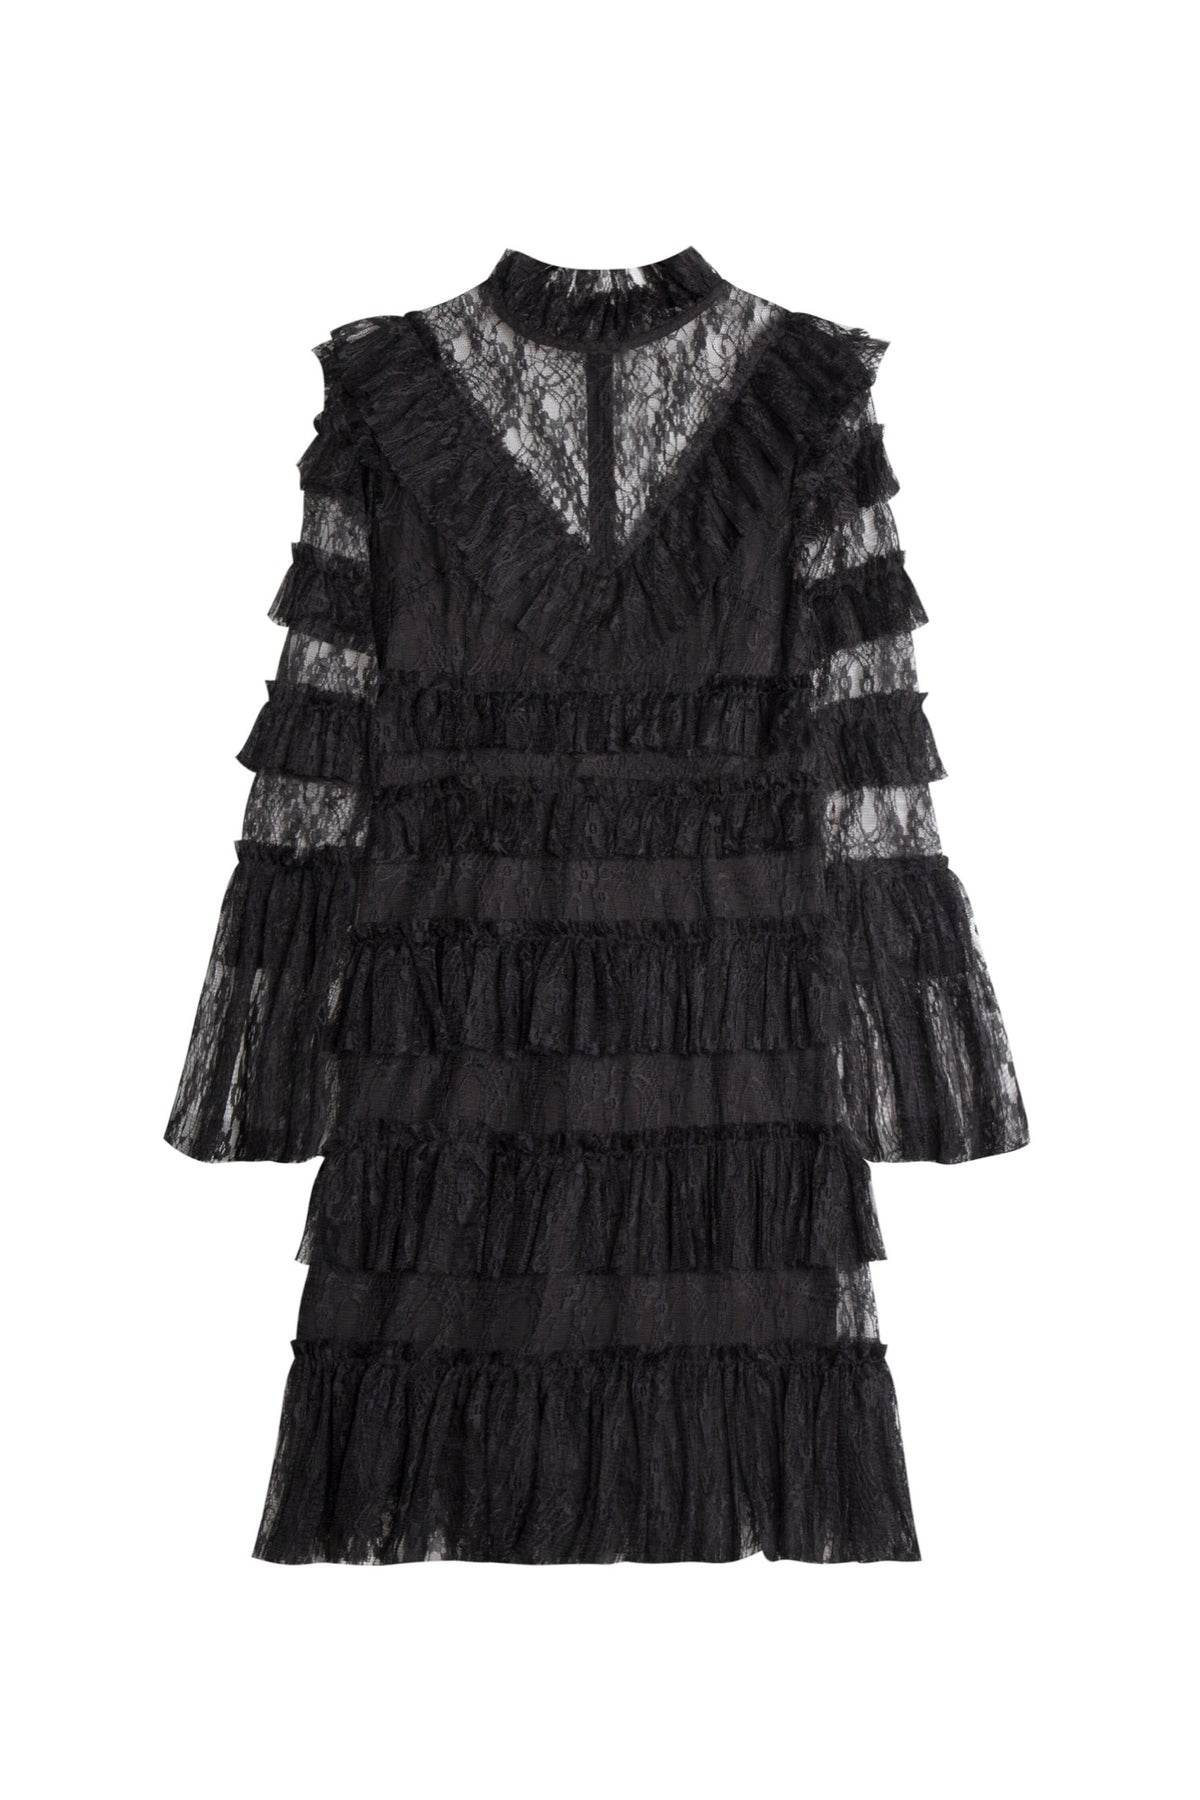 Rosa Dress - Black - By Malina - Kjoler - VILLOID.no